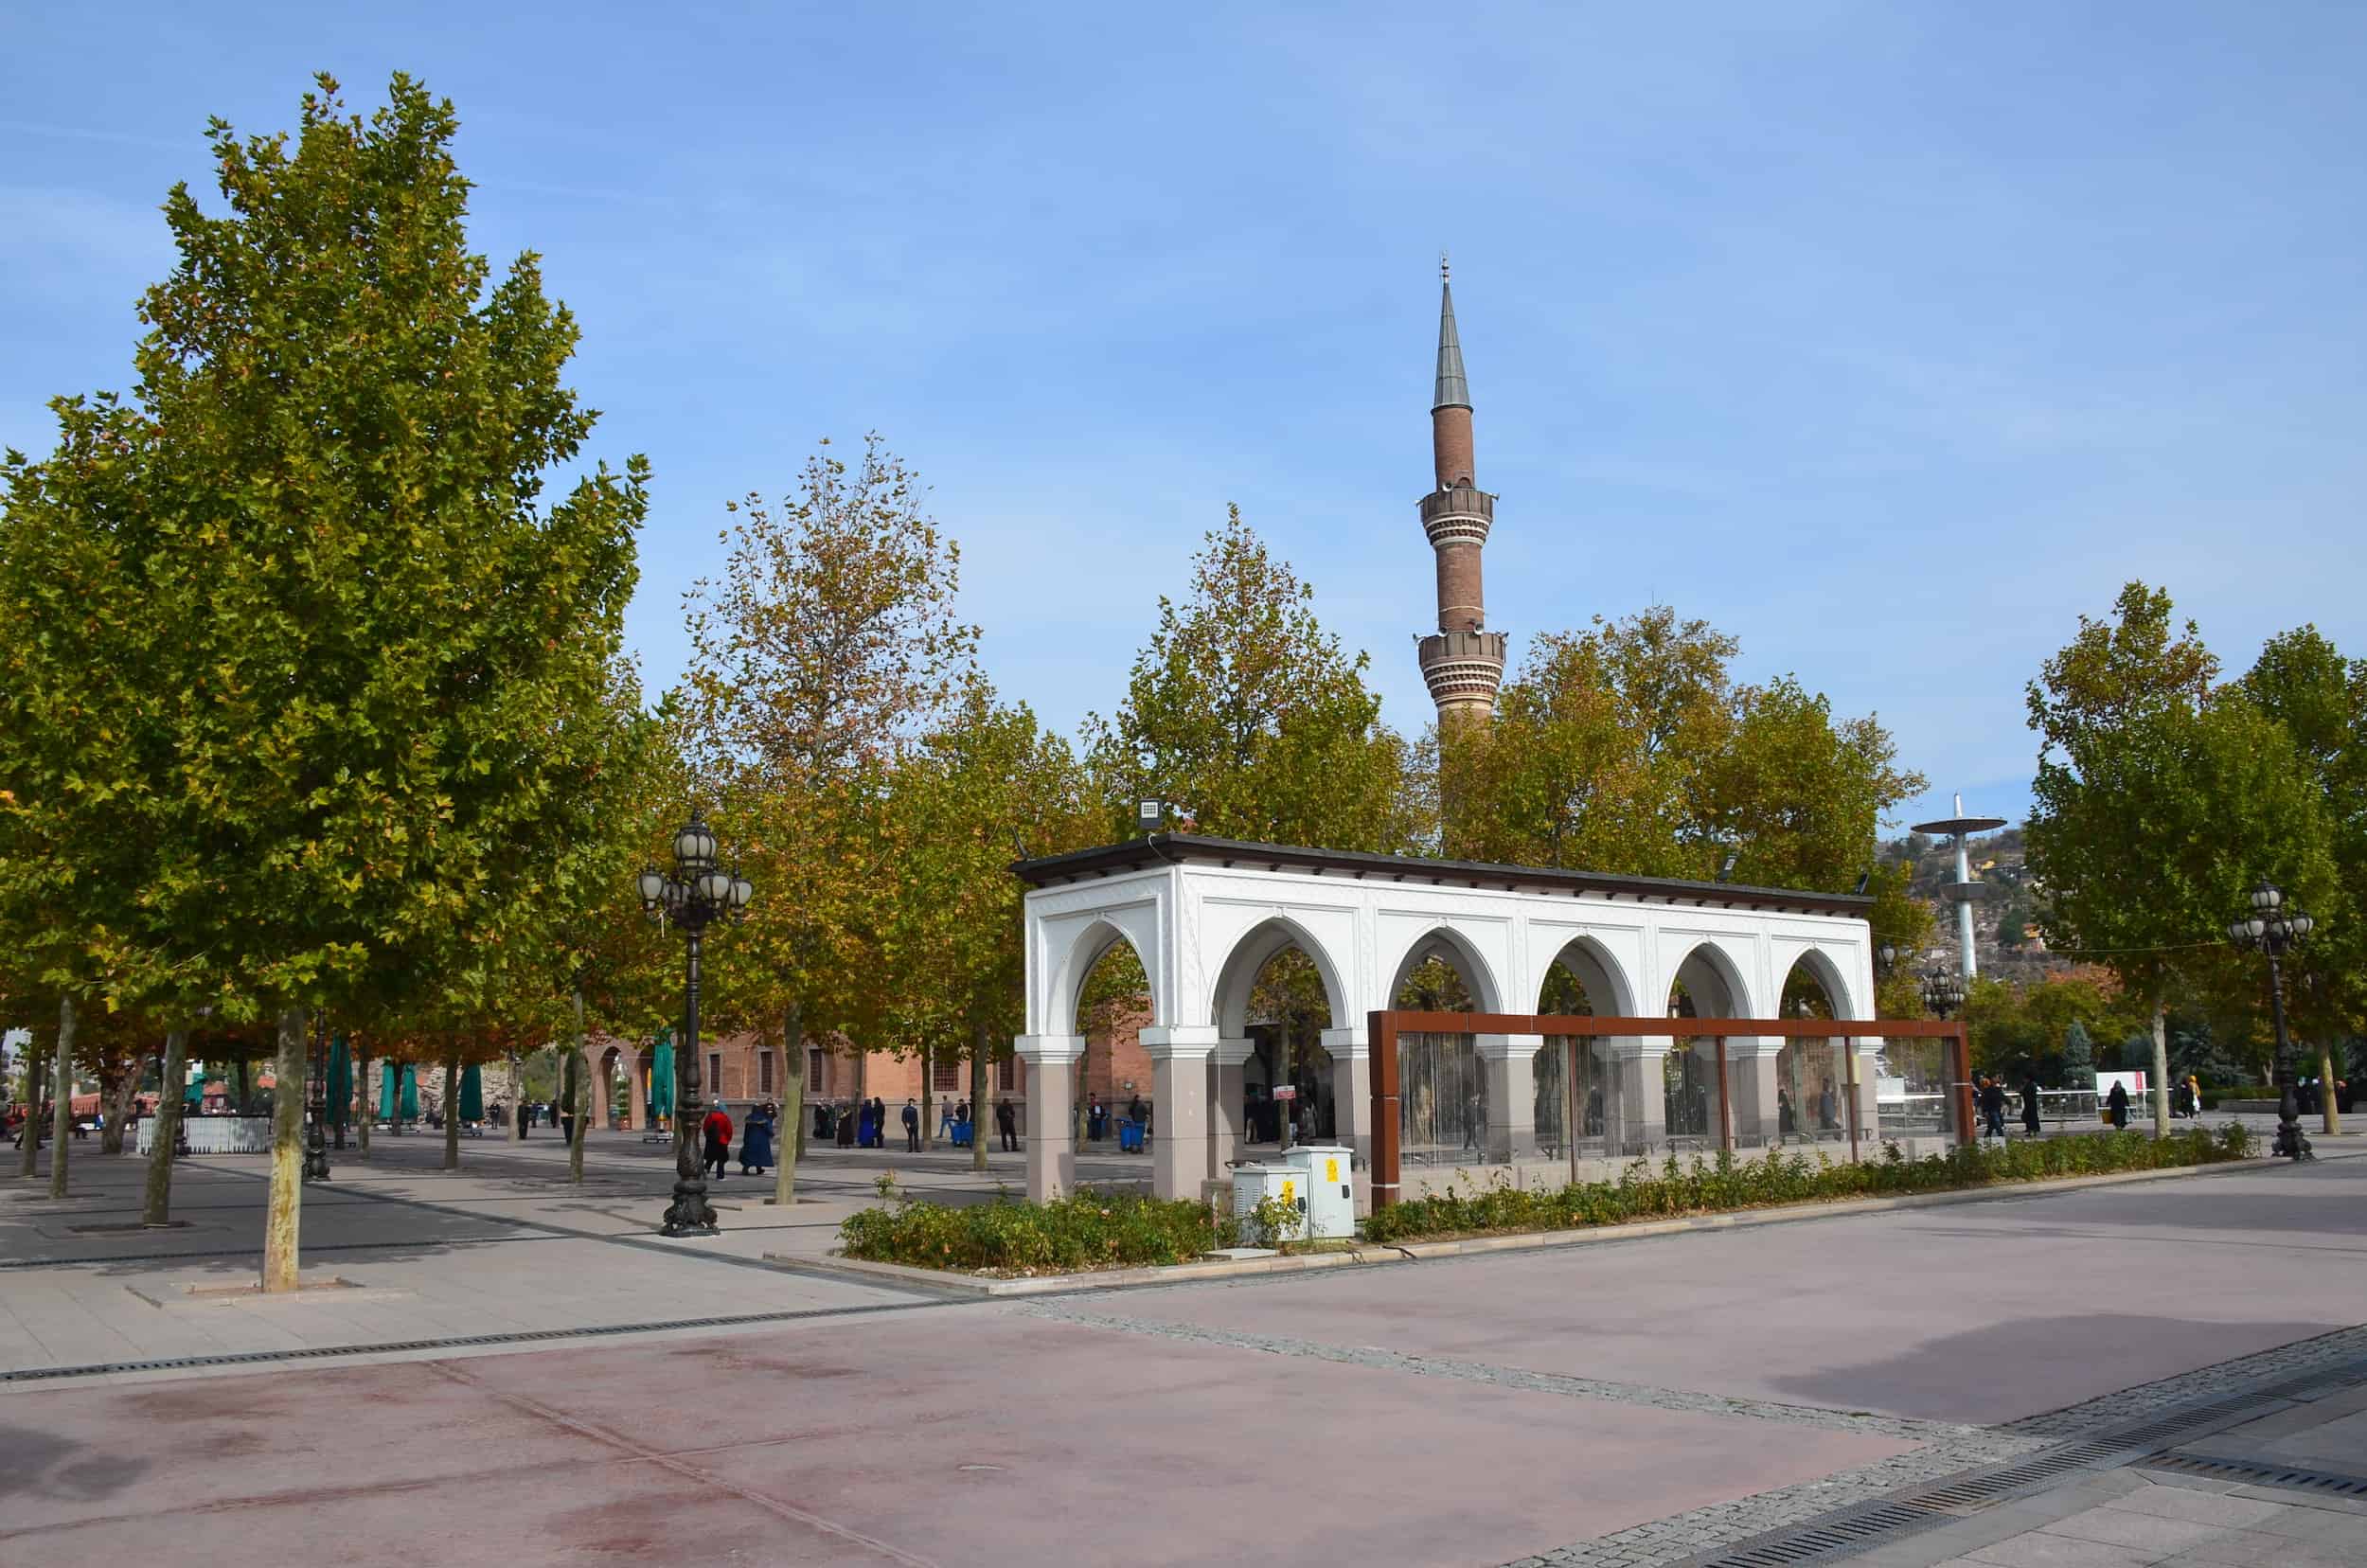 Grounds at the Hacı Bayram Mosque in Ulus, Ankara, Turkey